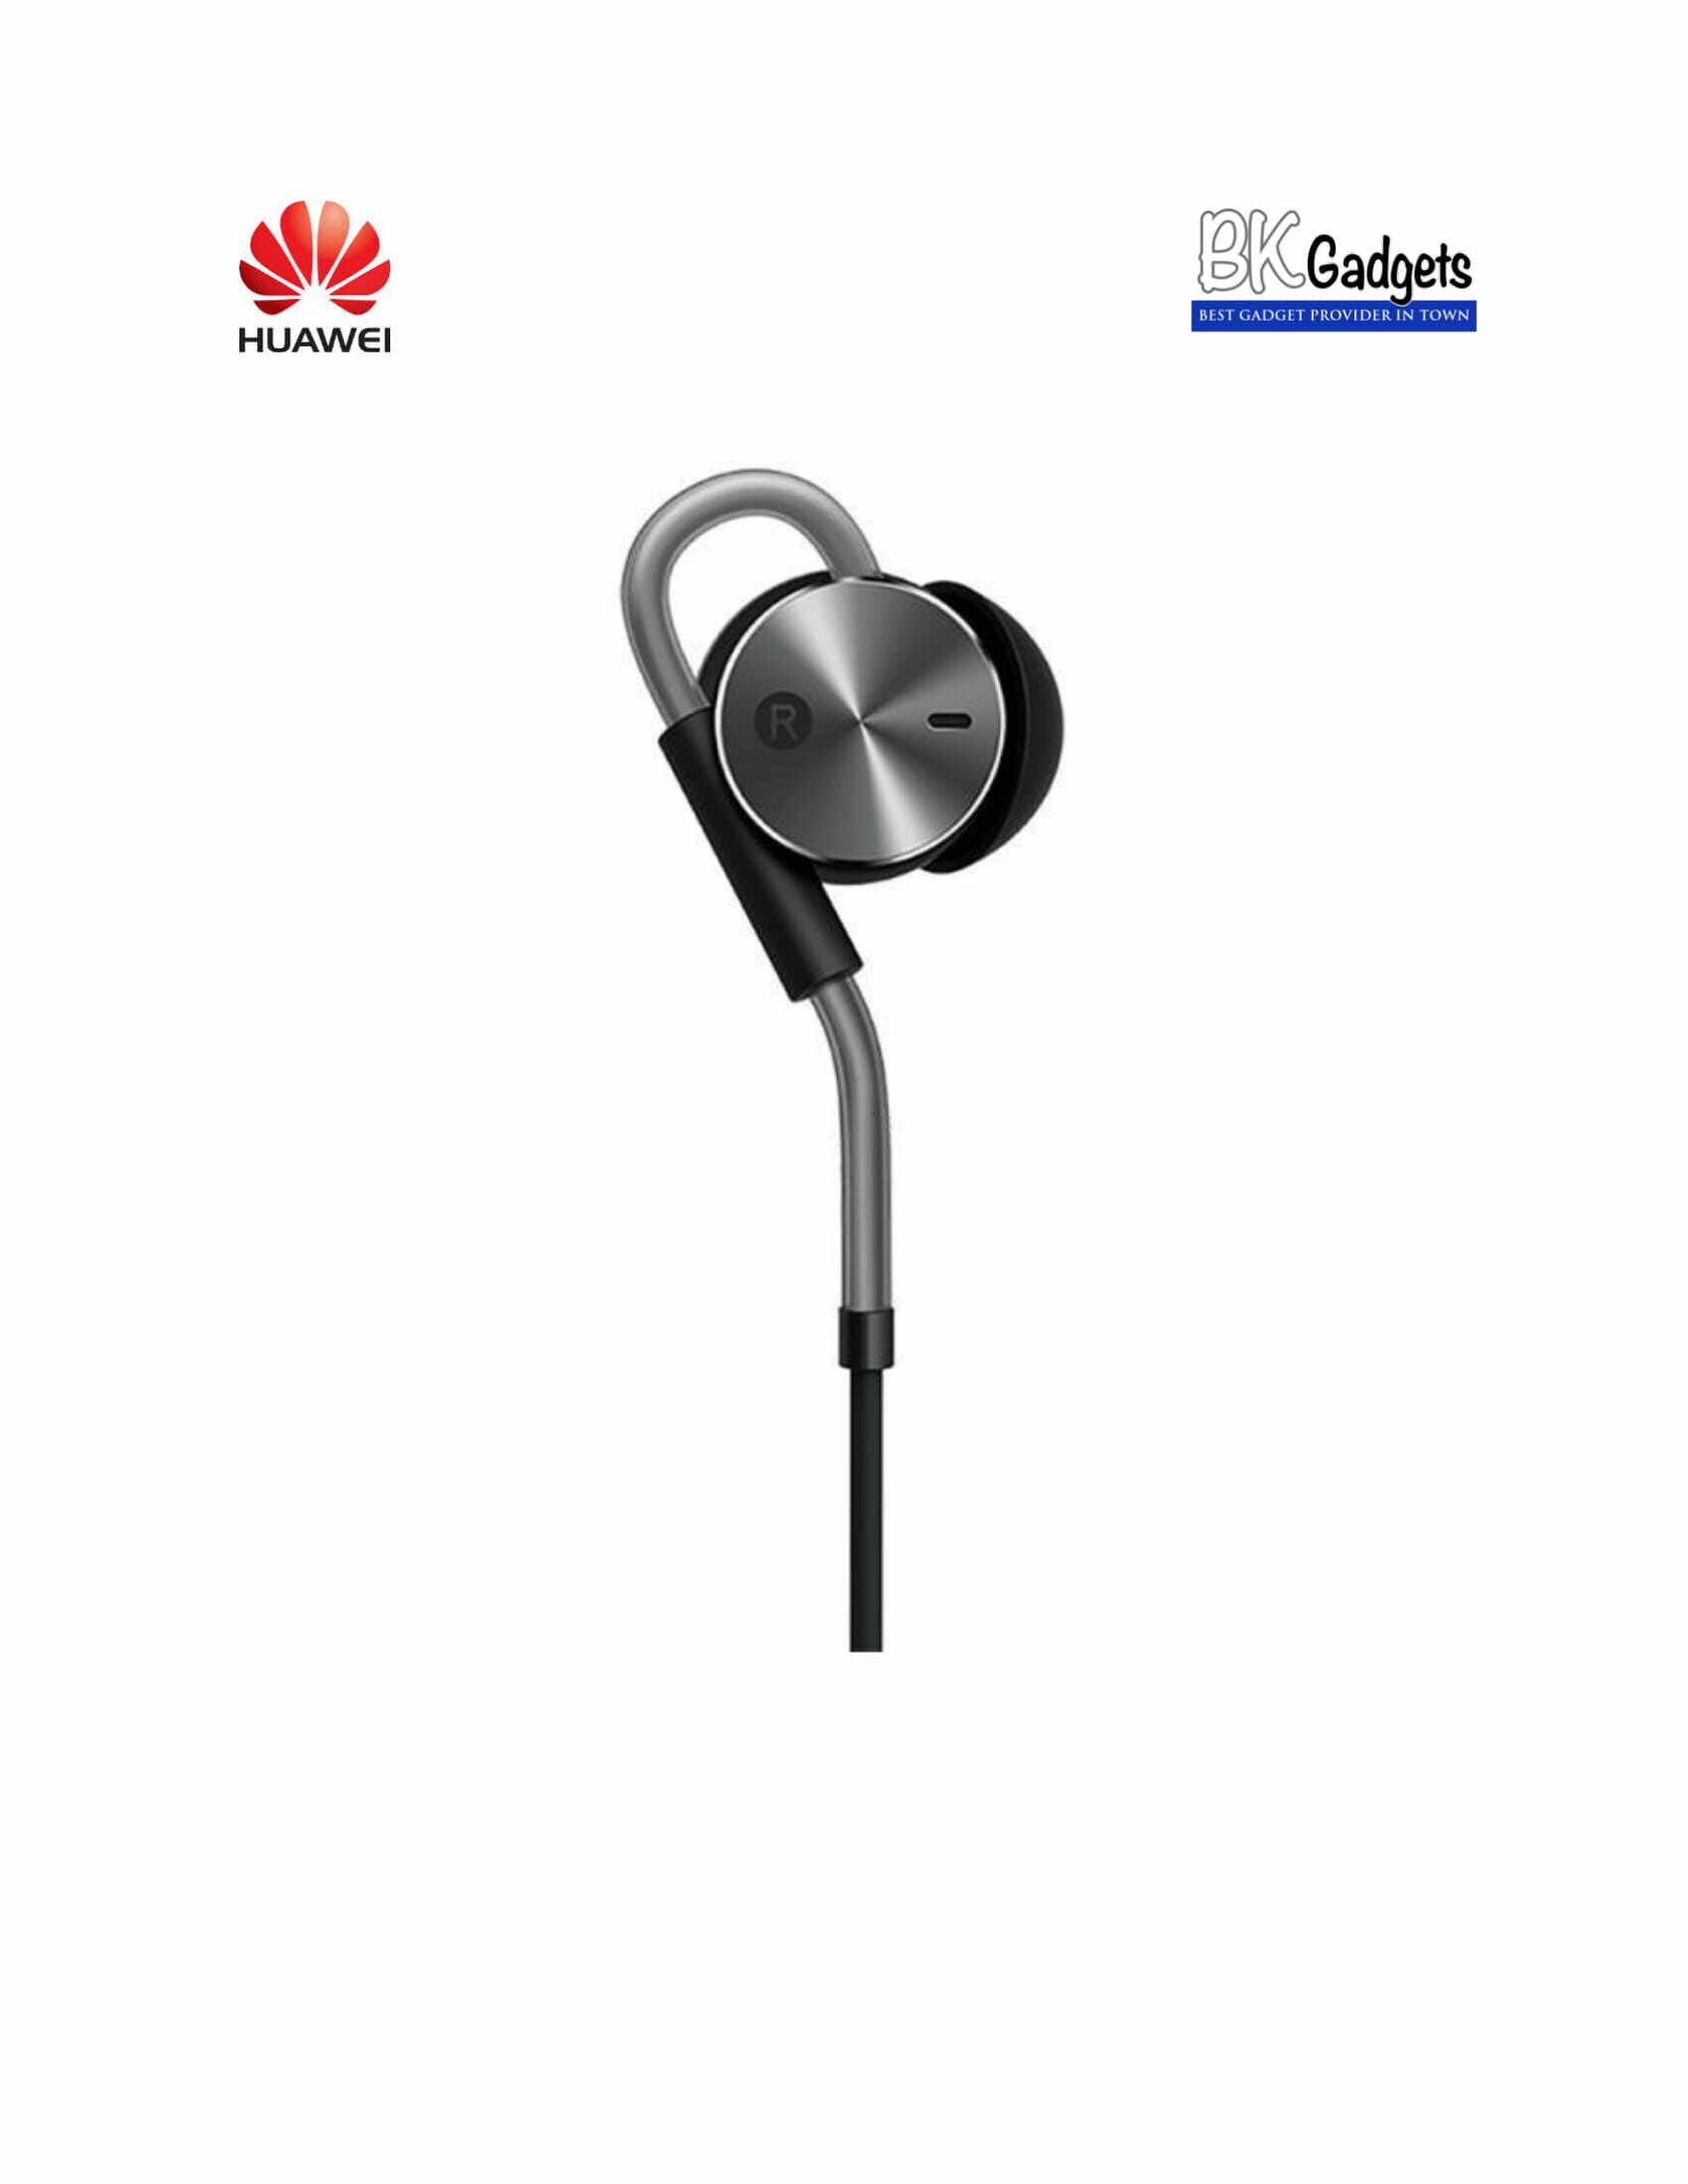 Huawei AM180 Voice Cancellation Earpiece - Original from Huawei Malaysia 1 Year Warranty